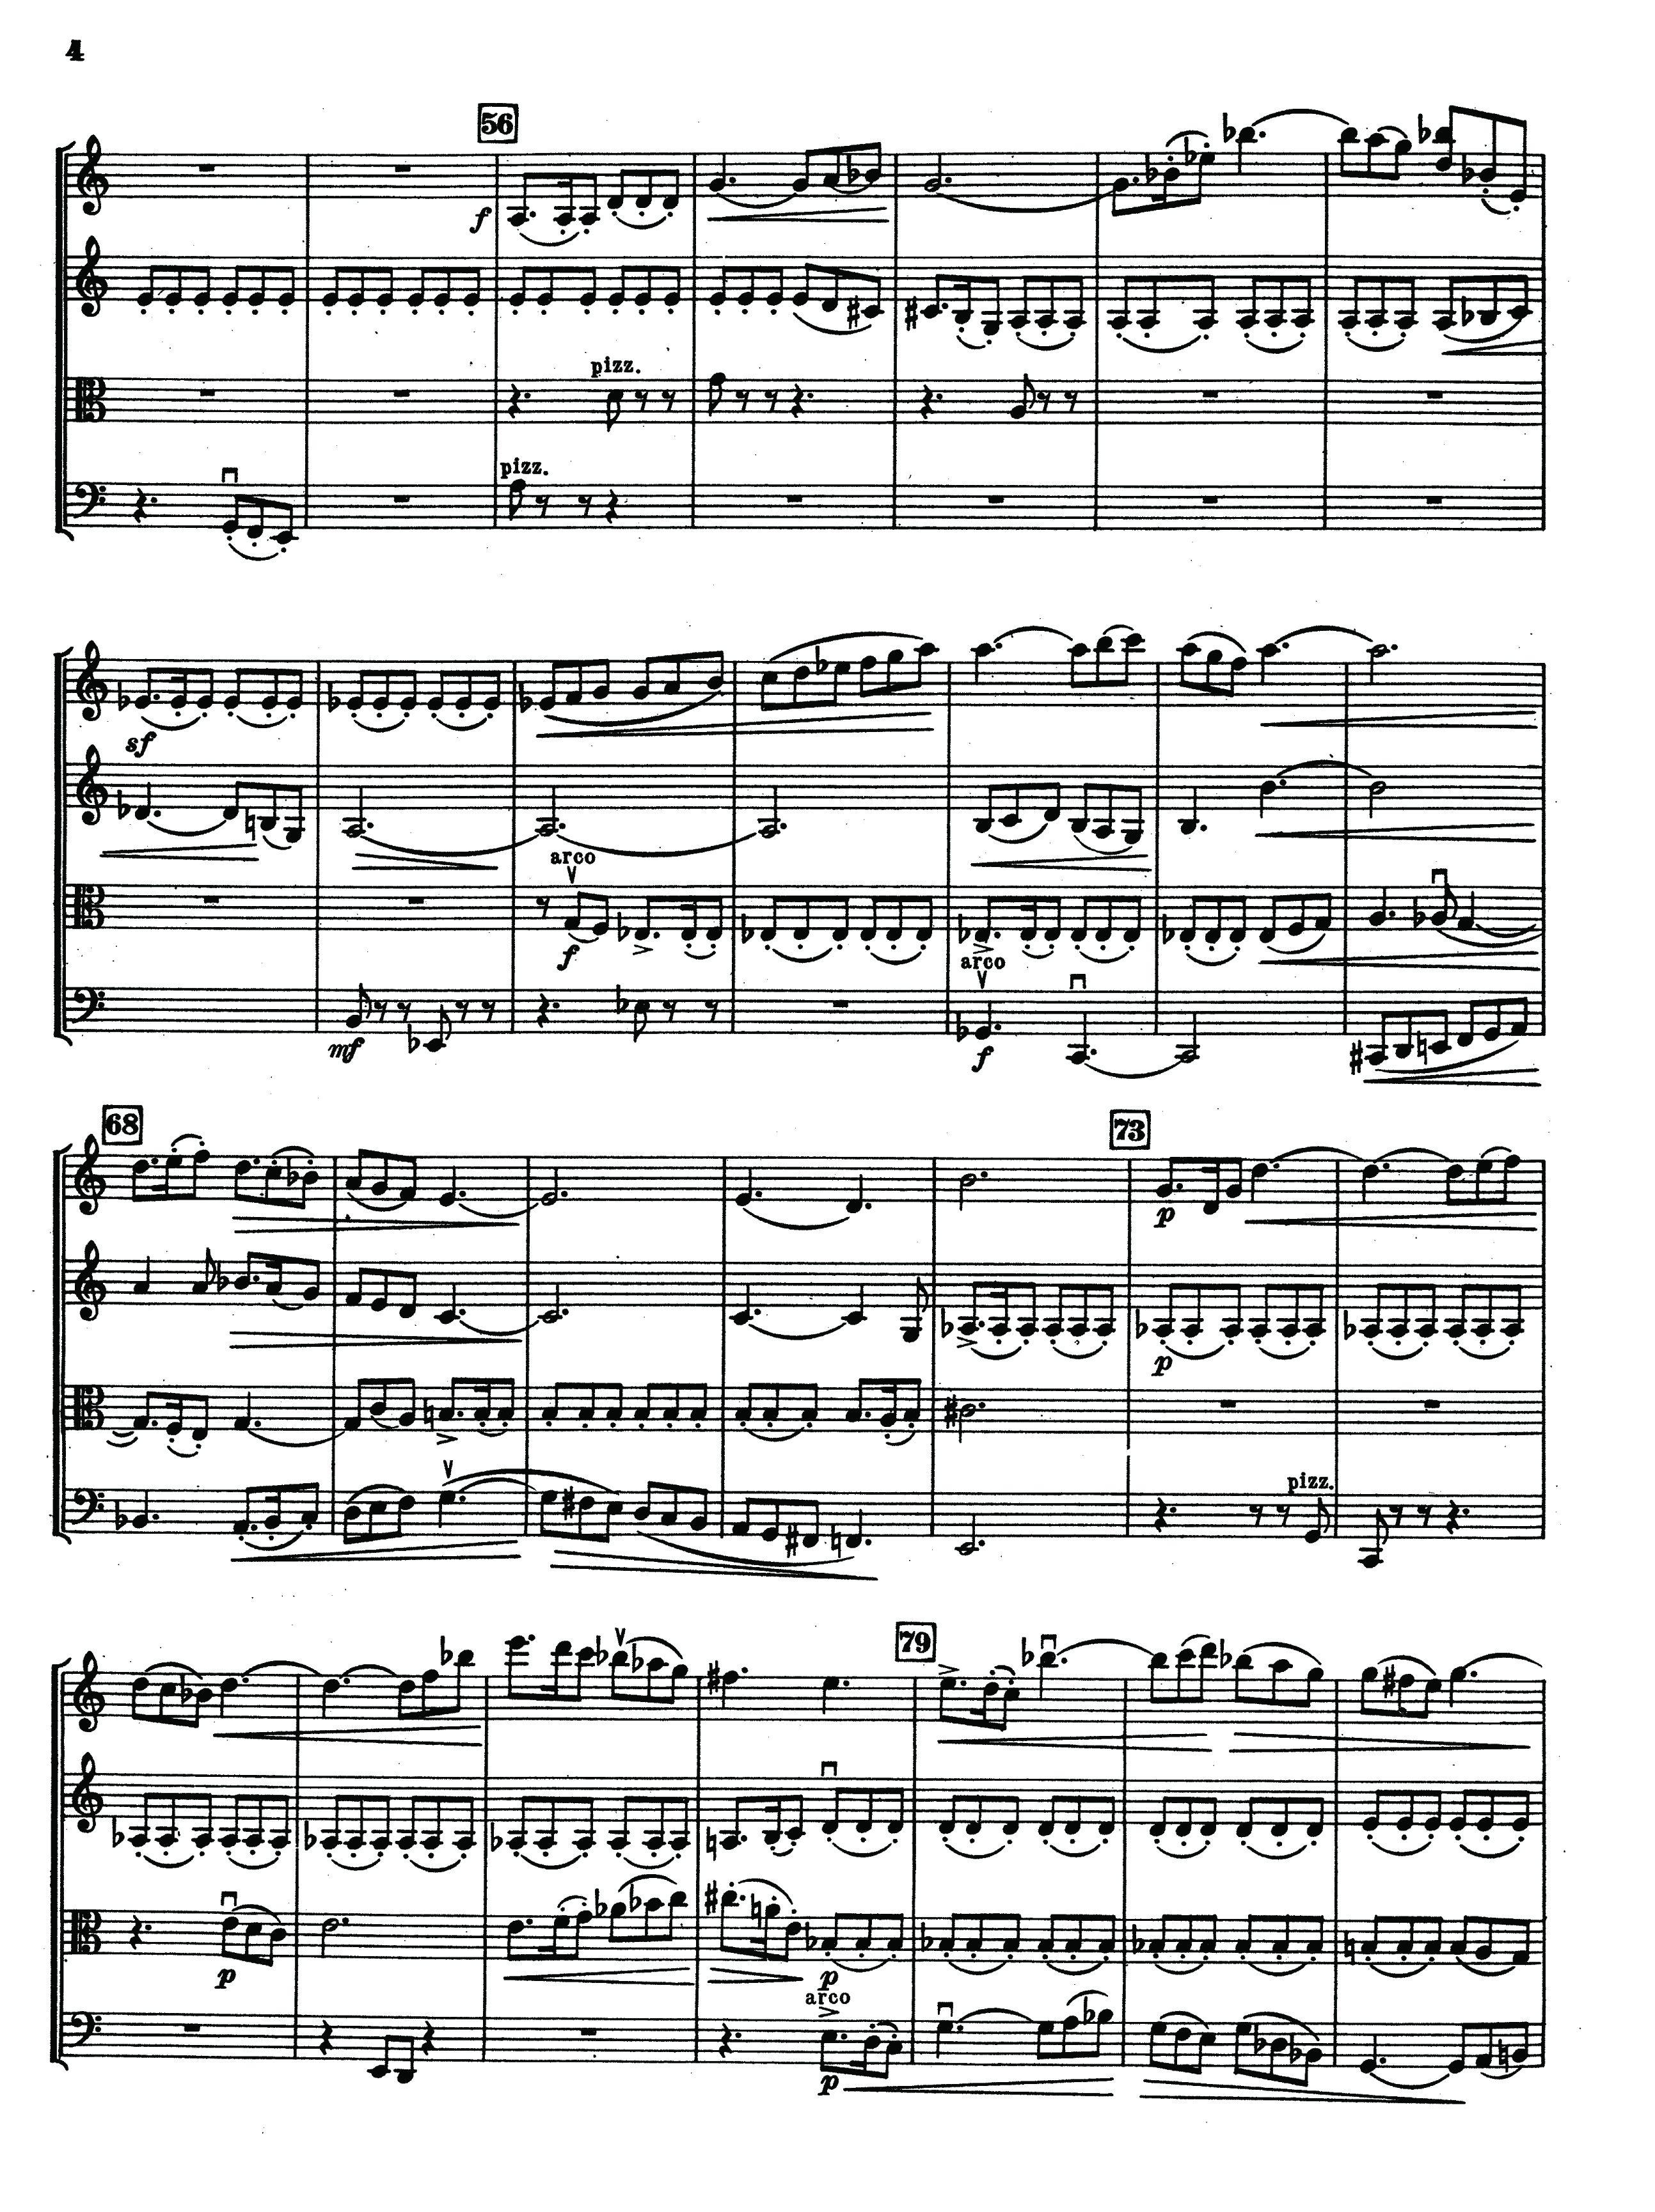 Score excerpt from Orrego-Salas's 1st String Quartet